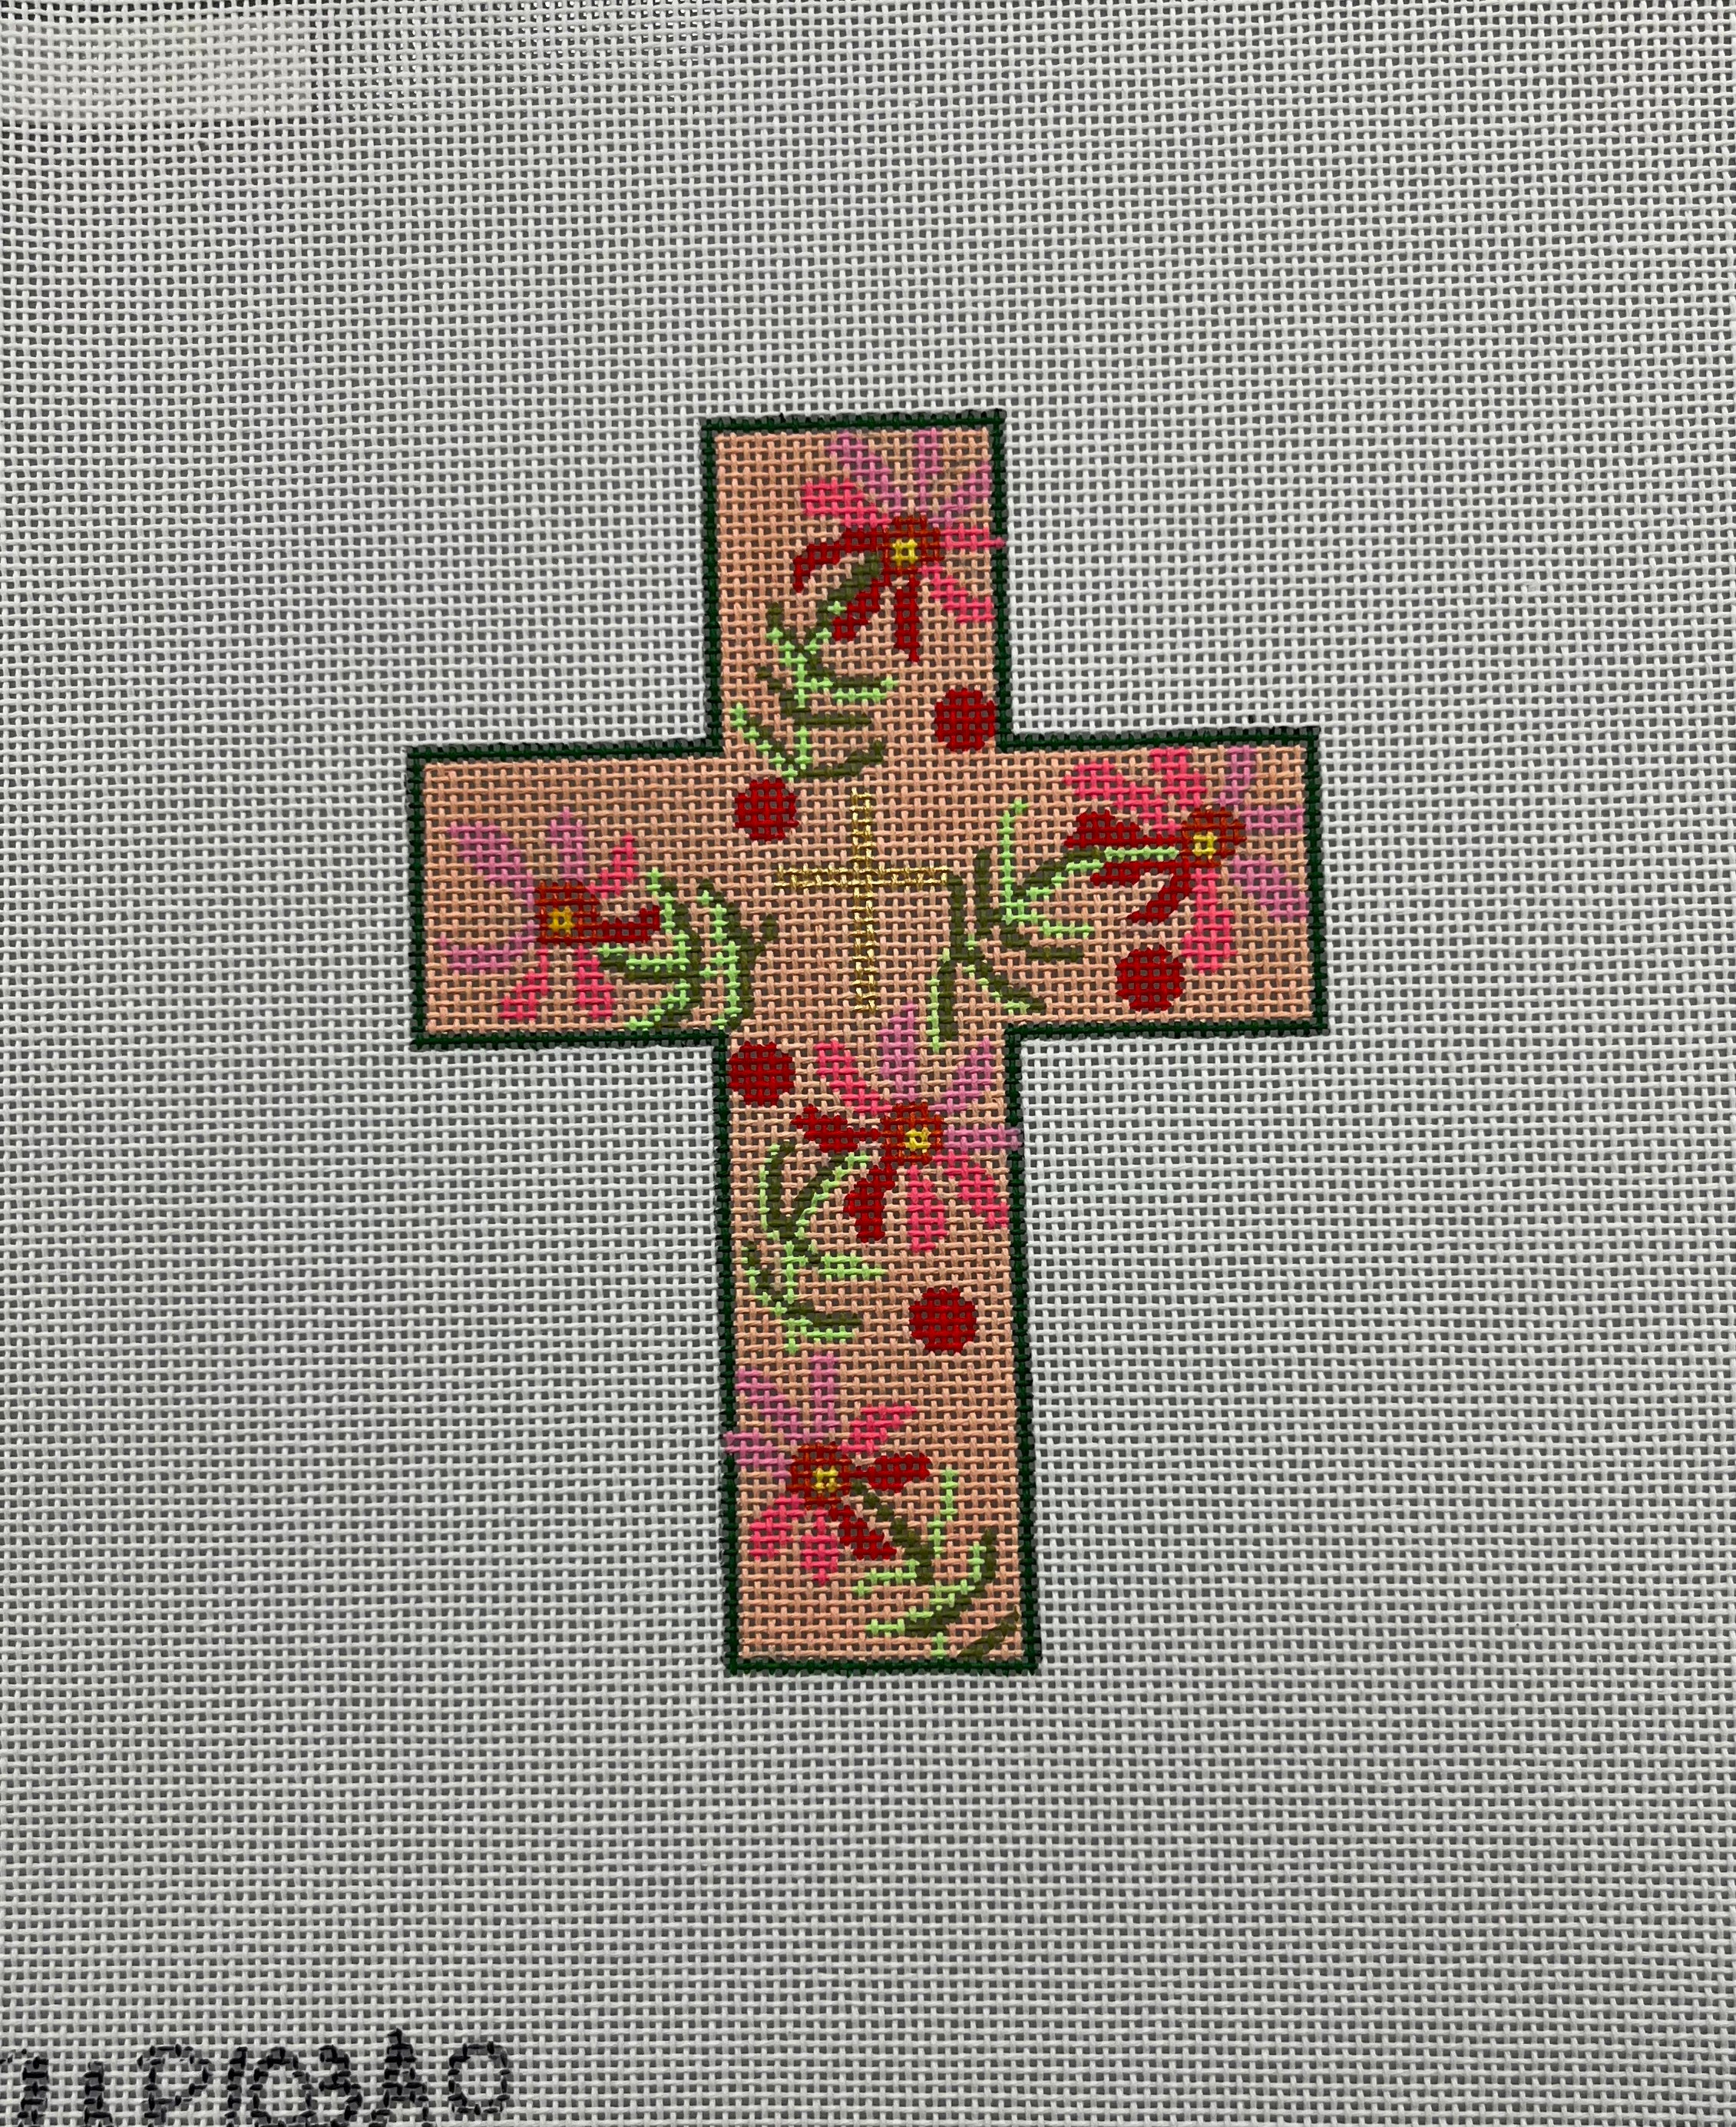 103-AO - Peach with Flowers Cross